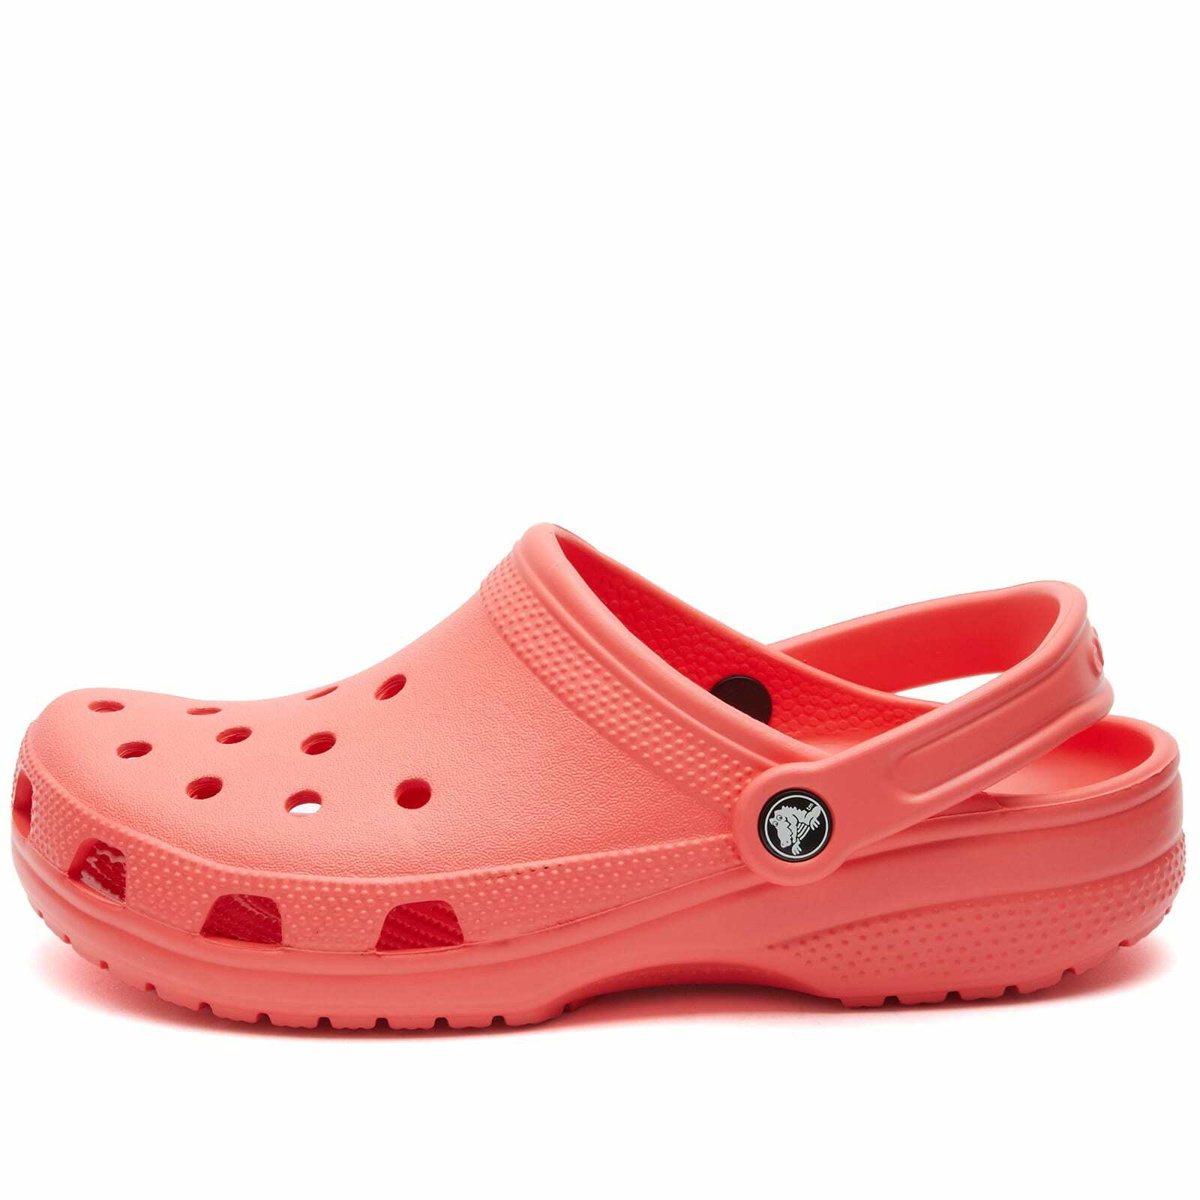 Crocs Classic Clog in Neon Watermelon Crocs